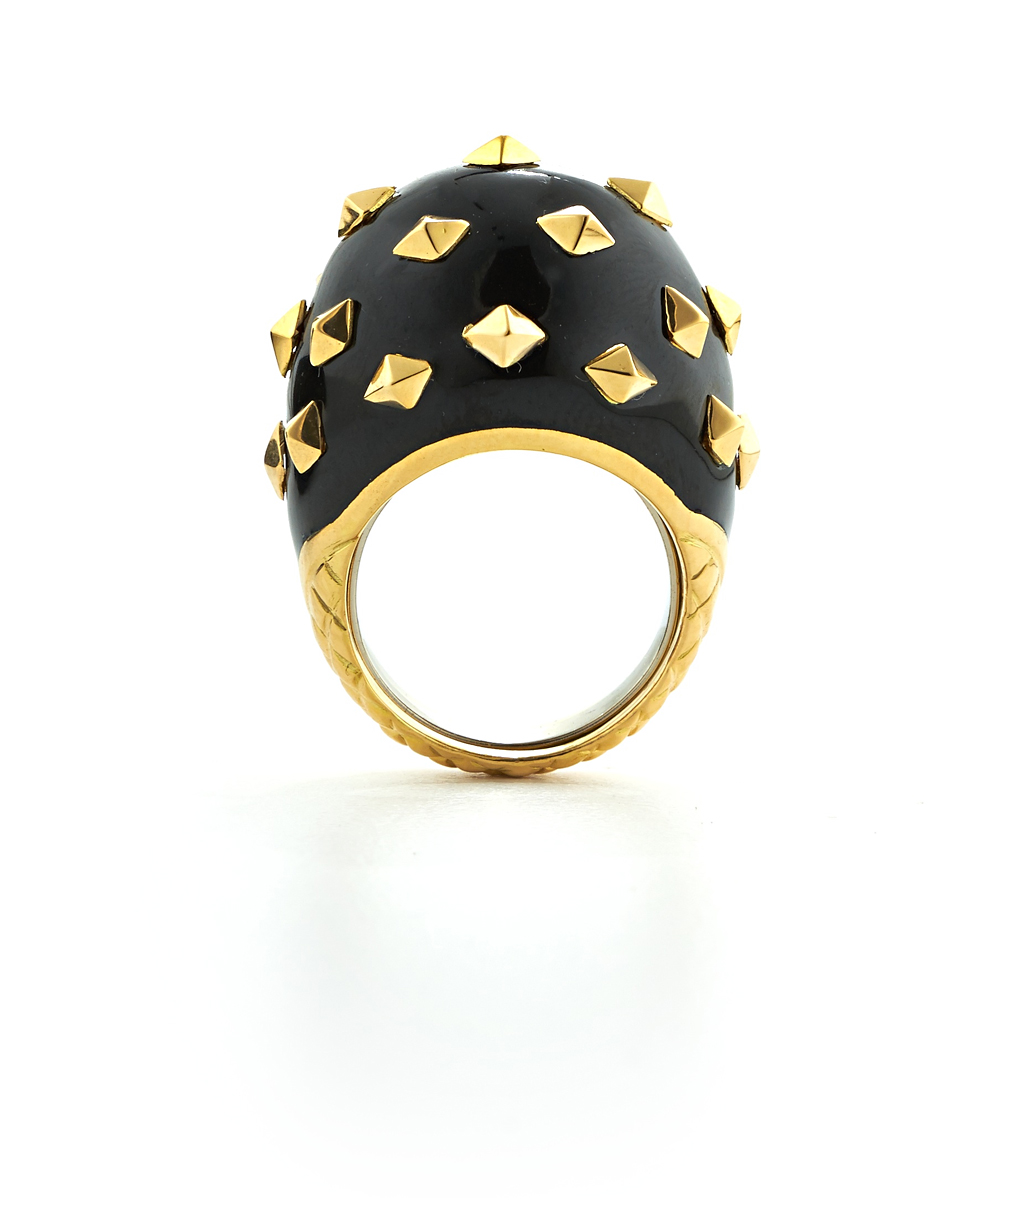 David Webb The Jackie Ring. Black enamel and gold. $9,600.